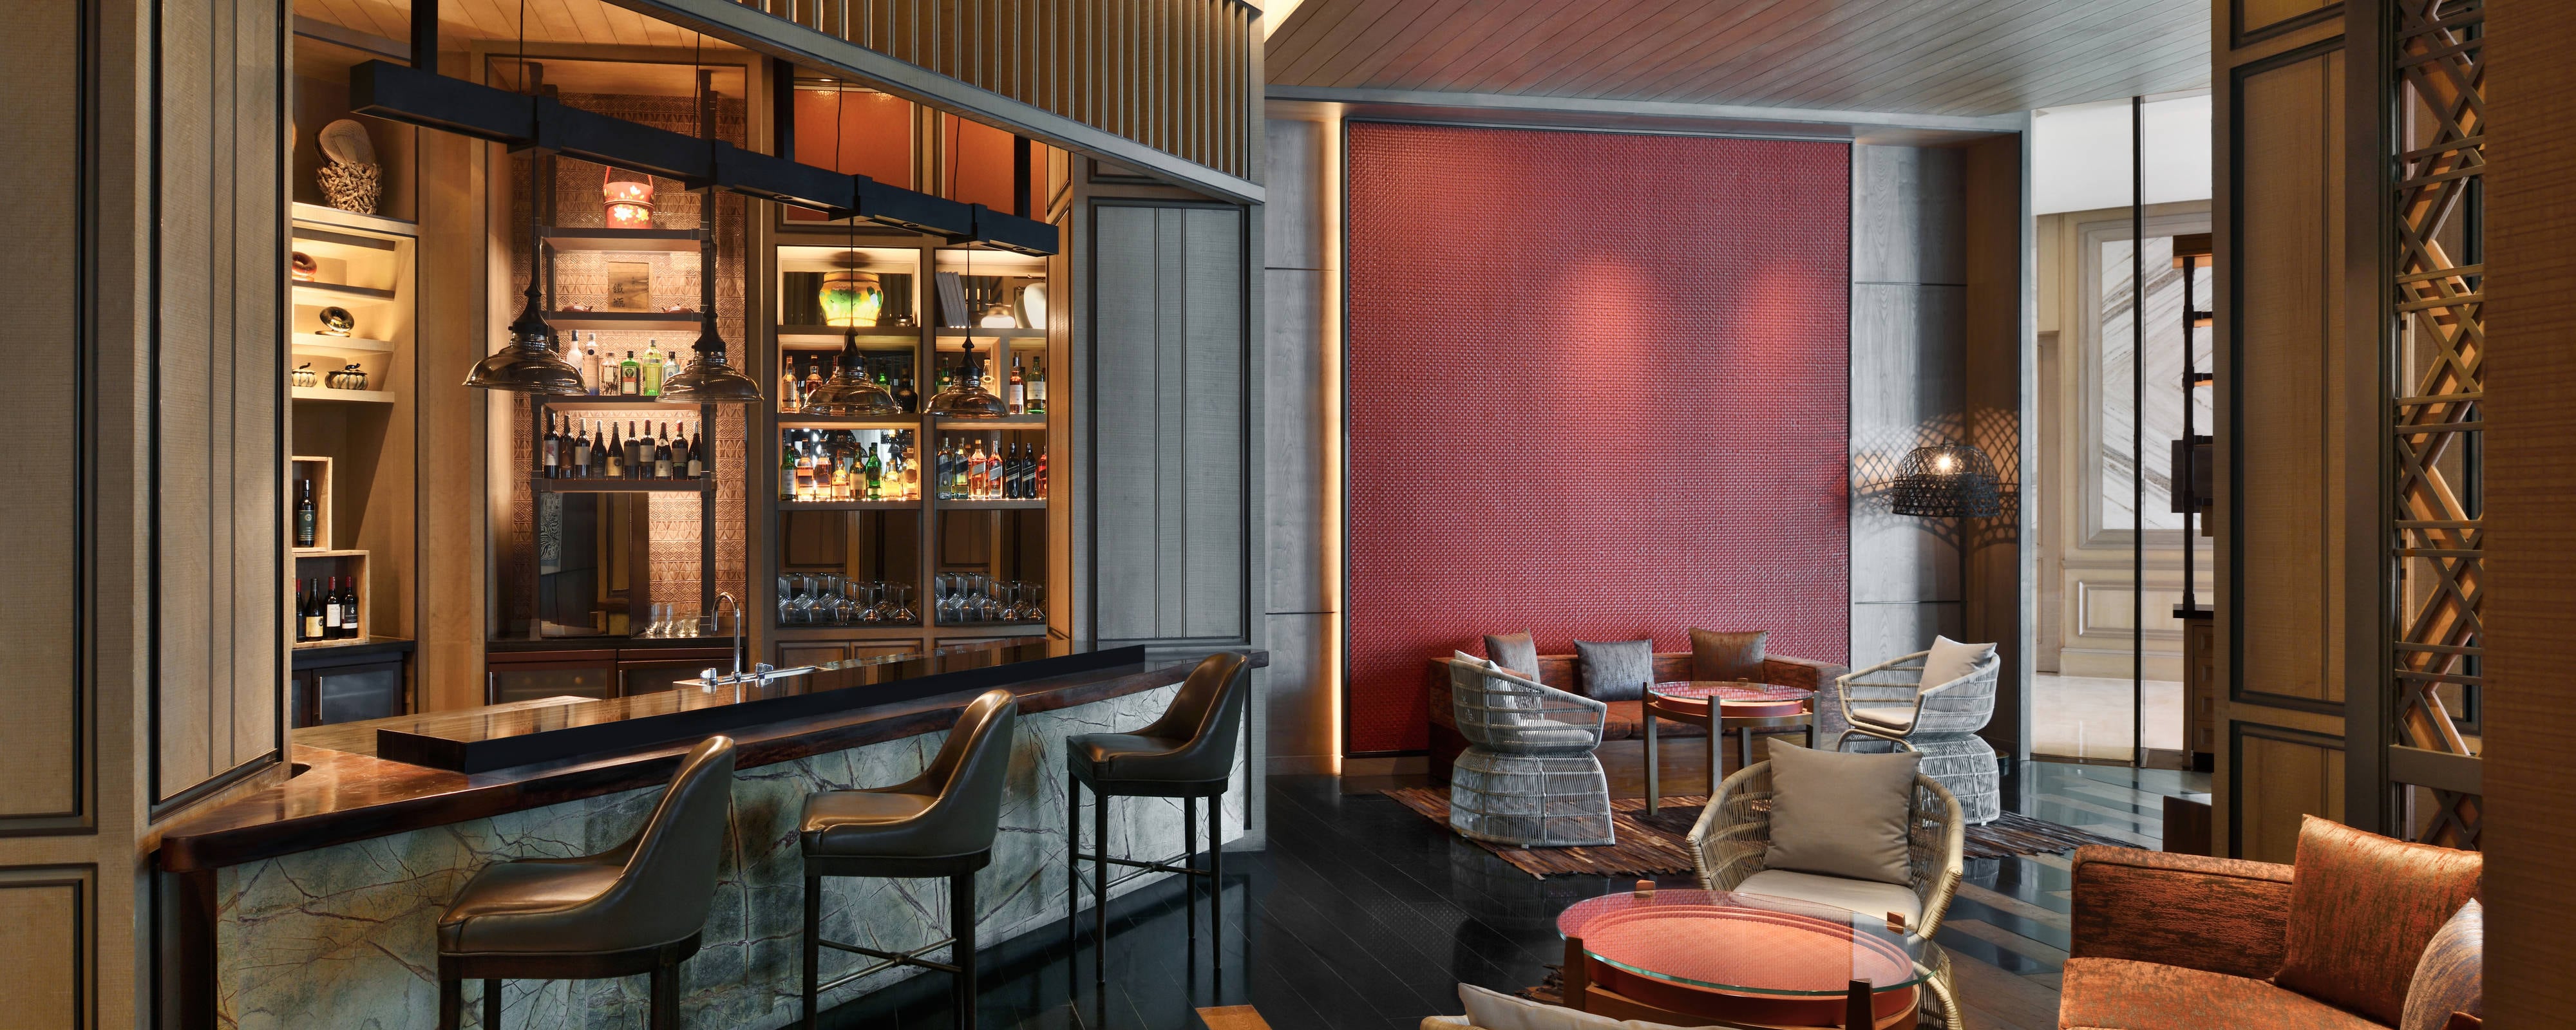 Kolkata Restaurant Thai Jw Marriott Hotel Kolkata,Exterior Paint Colors That Go Well With Red Brick